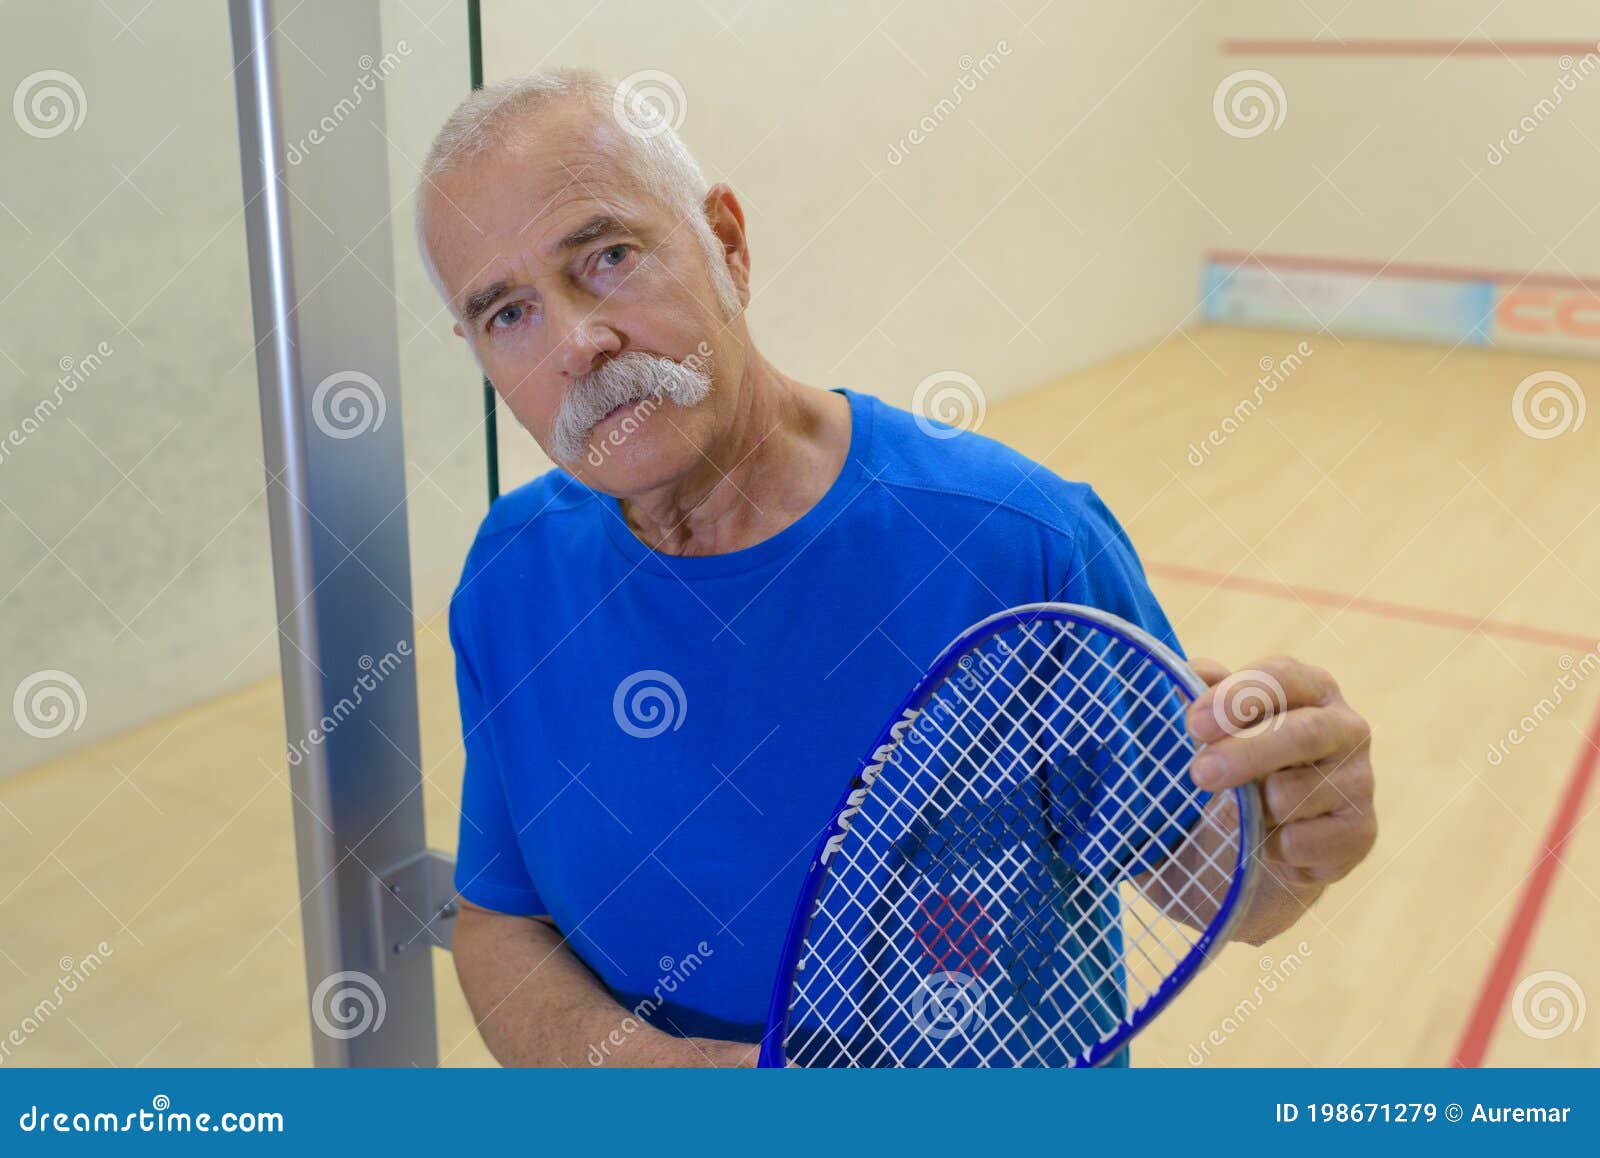 senior man on indoor court holding raquet